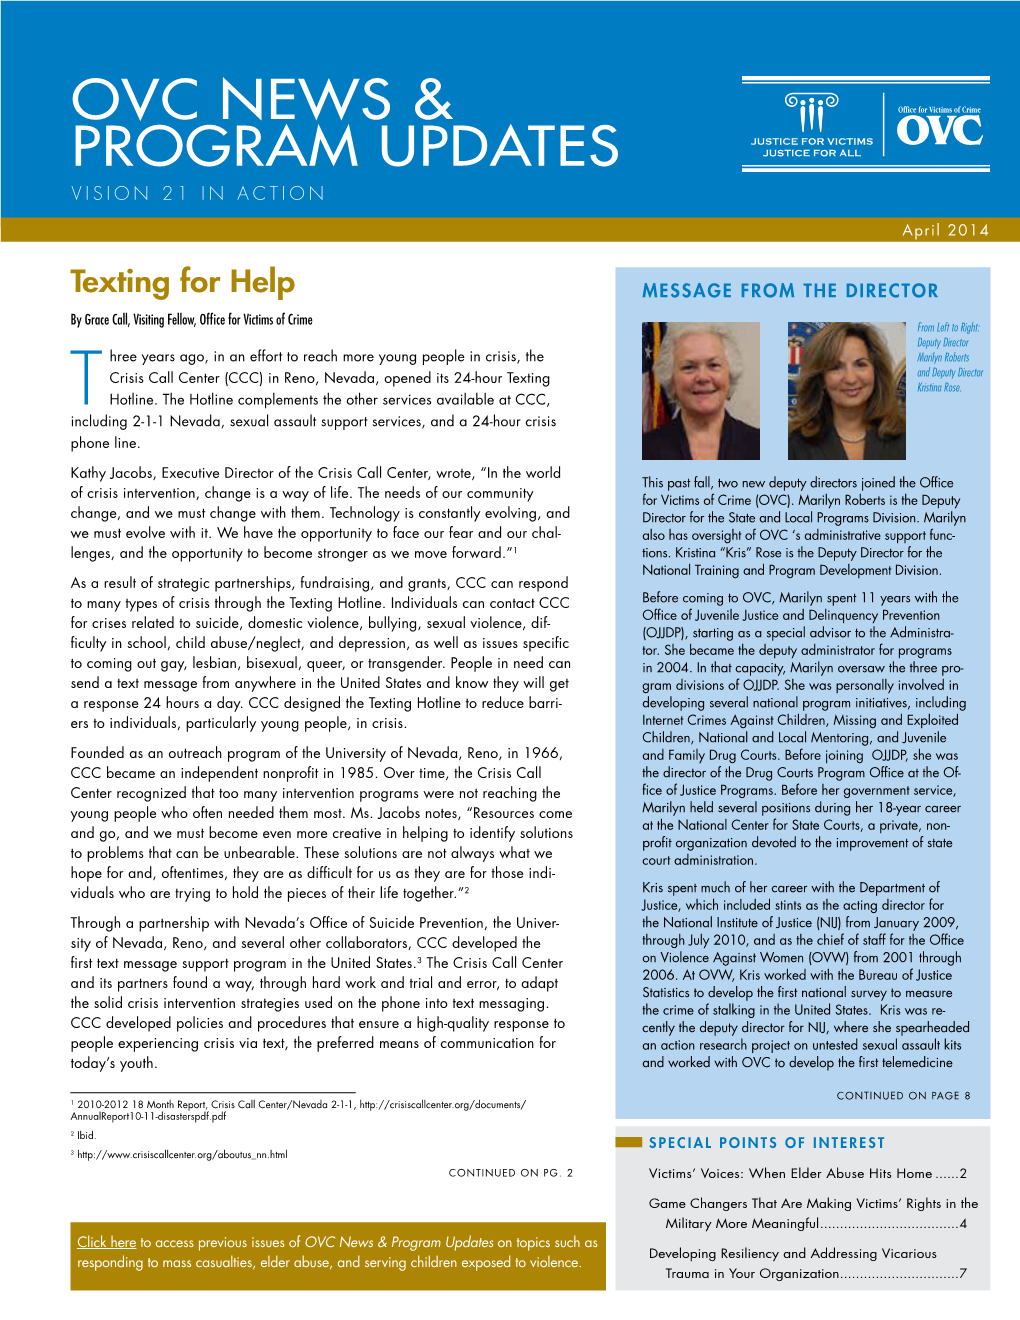 OVC News & Program Updates, April 2014